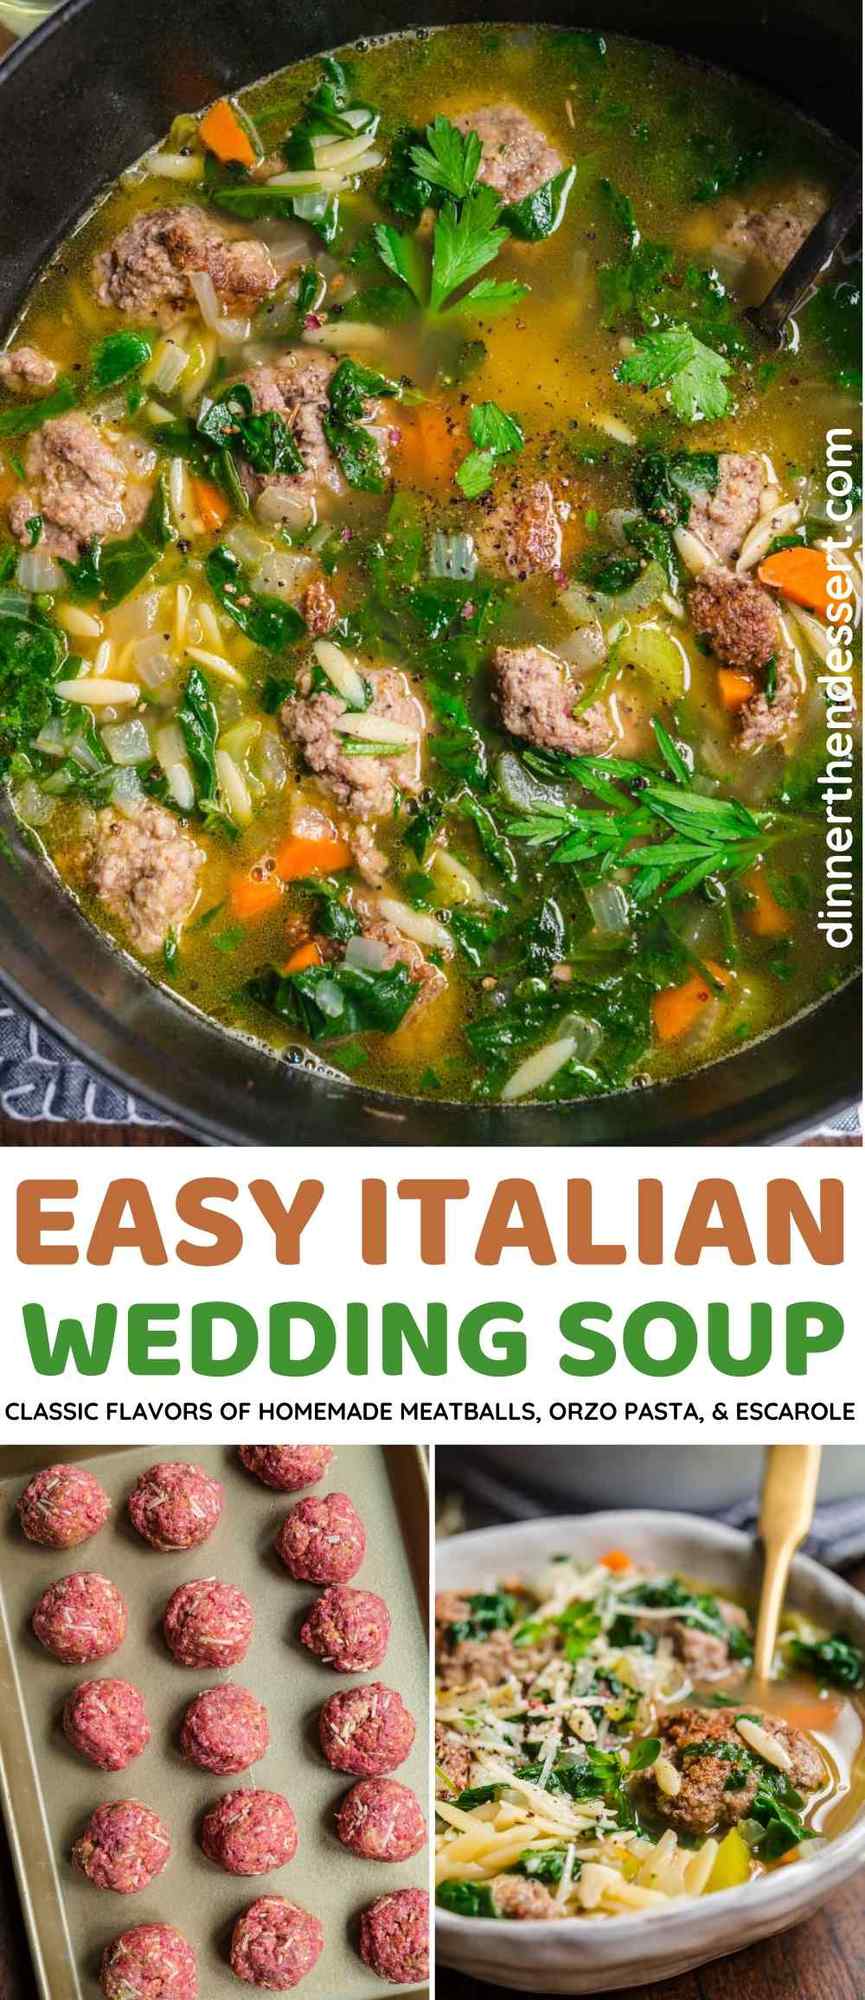 https://dinnerthendessert.com/wp-content/uploads/2020/07/Italian-Wedding-Soup-L.jpg